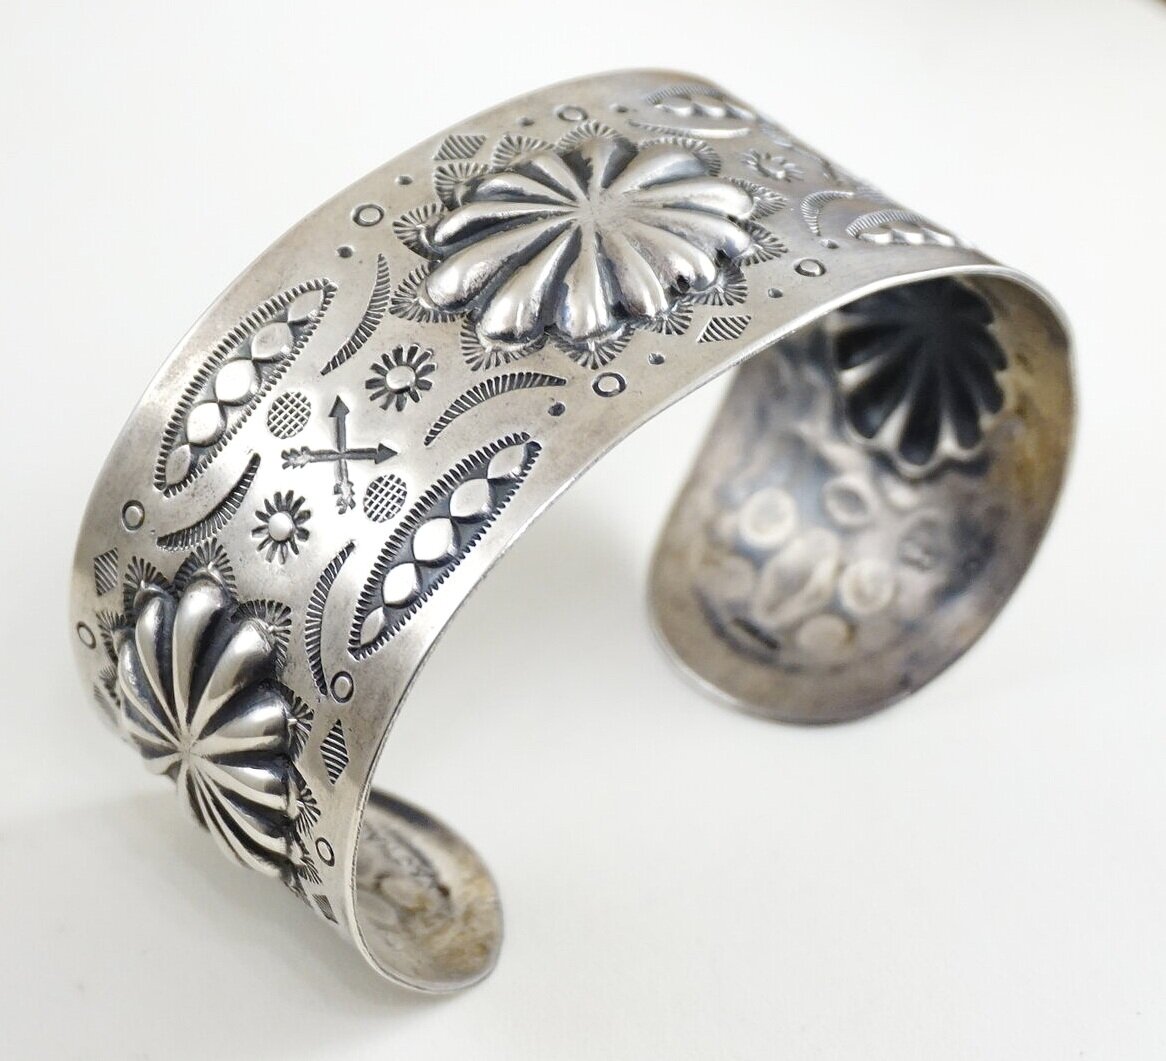 Details more than 60 navajo silver bracelet